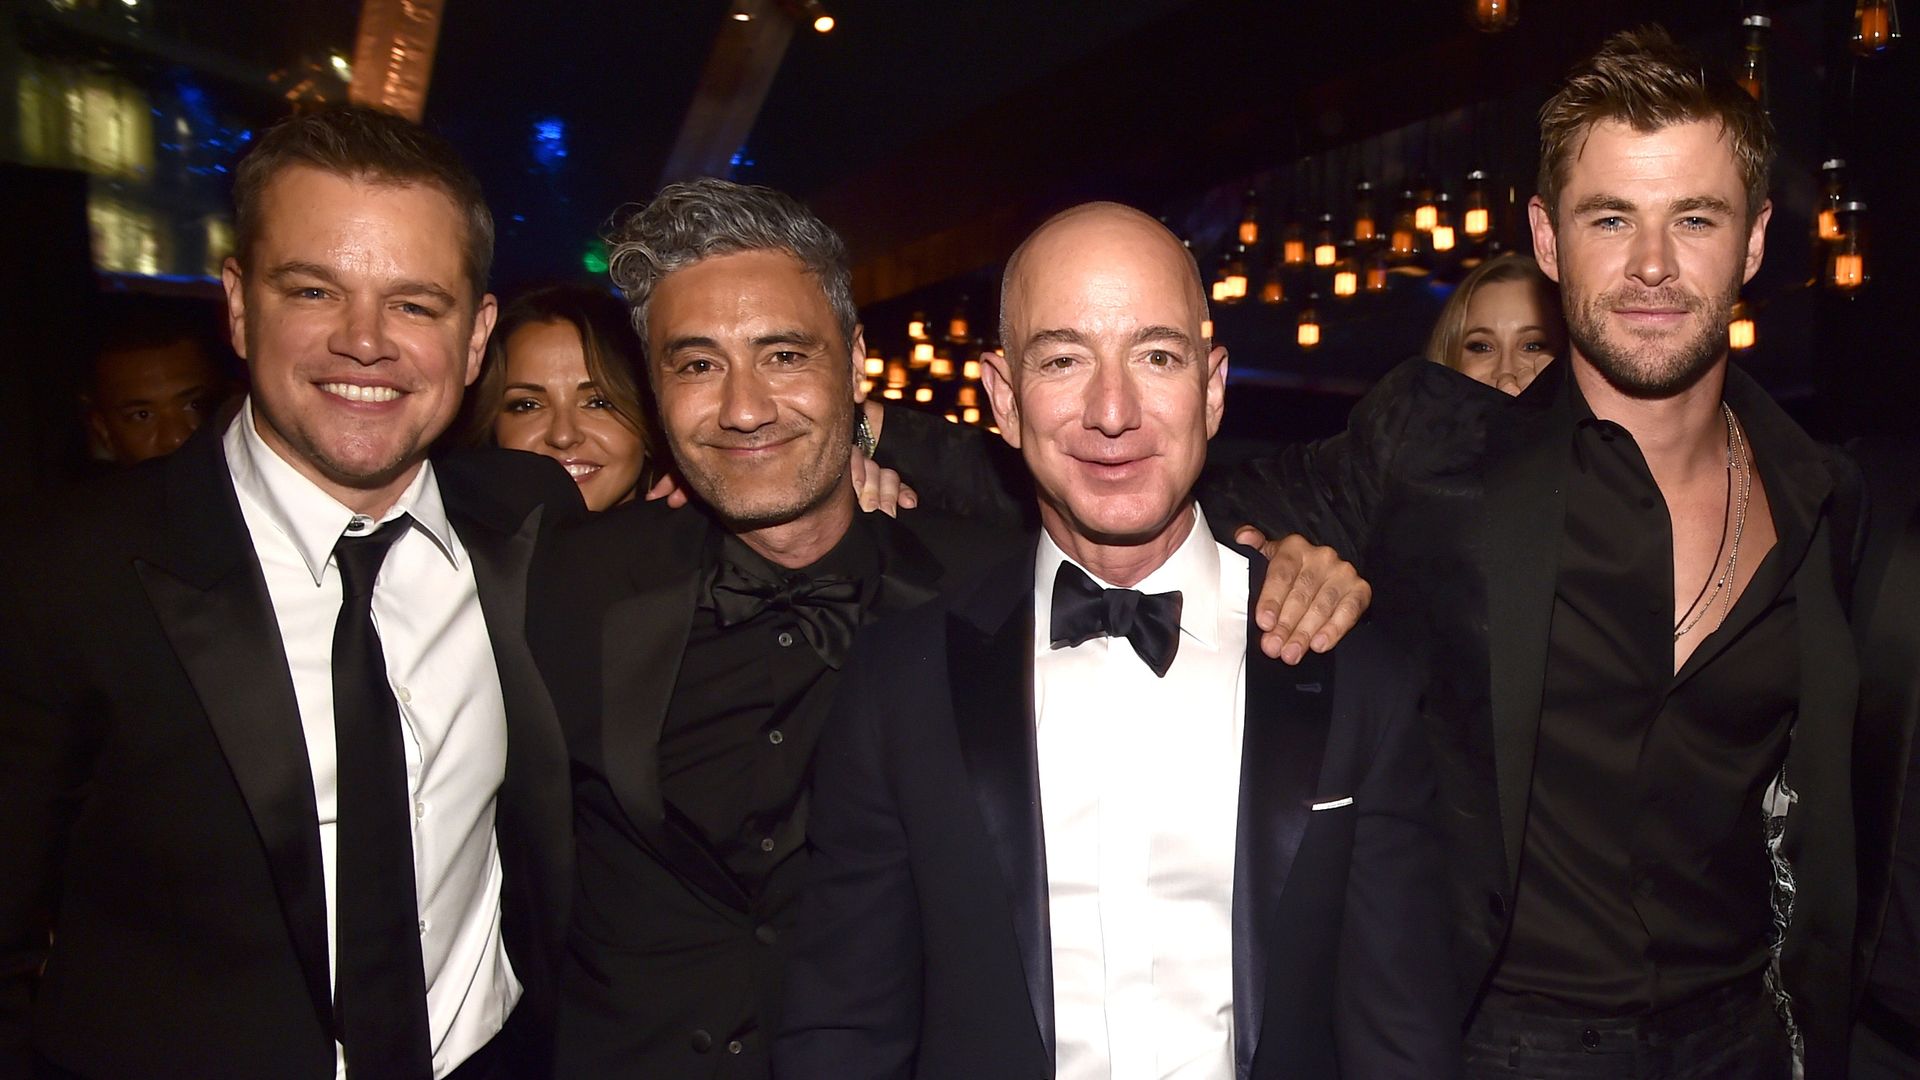 Jeff Bezos surrounded by Matt Damon, Taika Waititi and Chris Hemsworth at a Golden Globes party